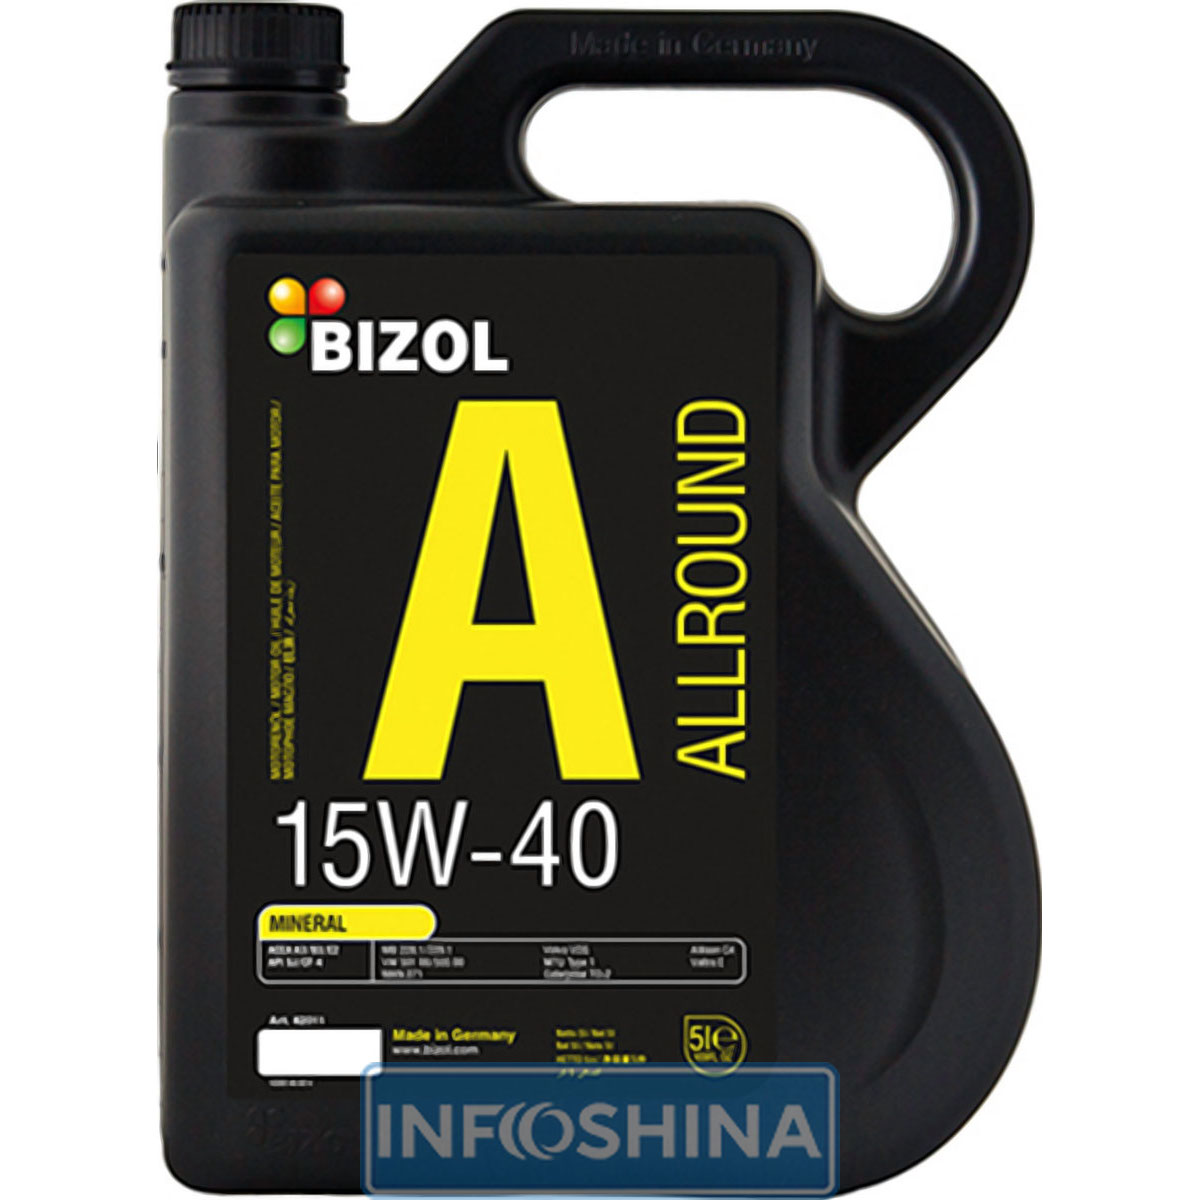 Купить масло Bizol Allround 15W-40 (5л)